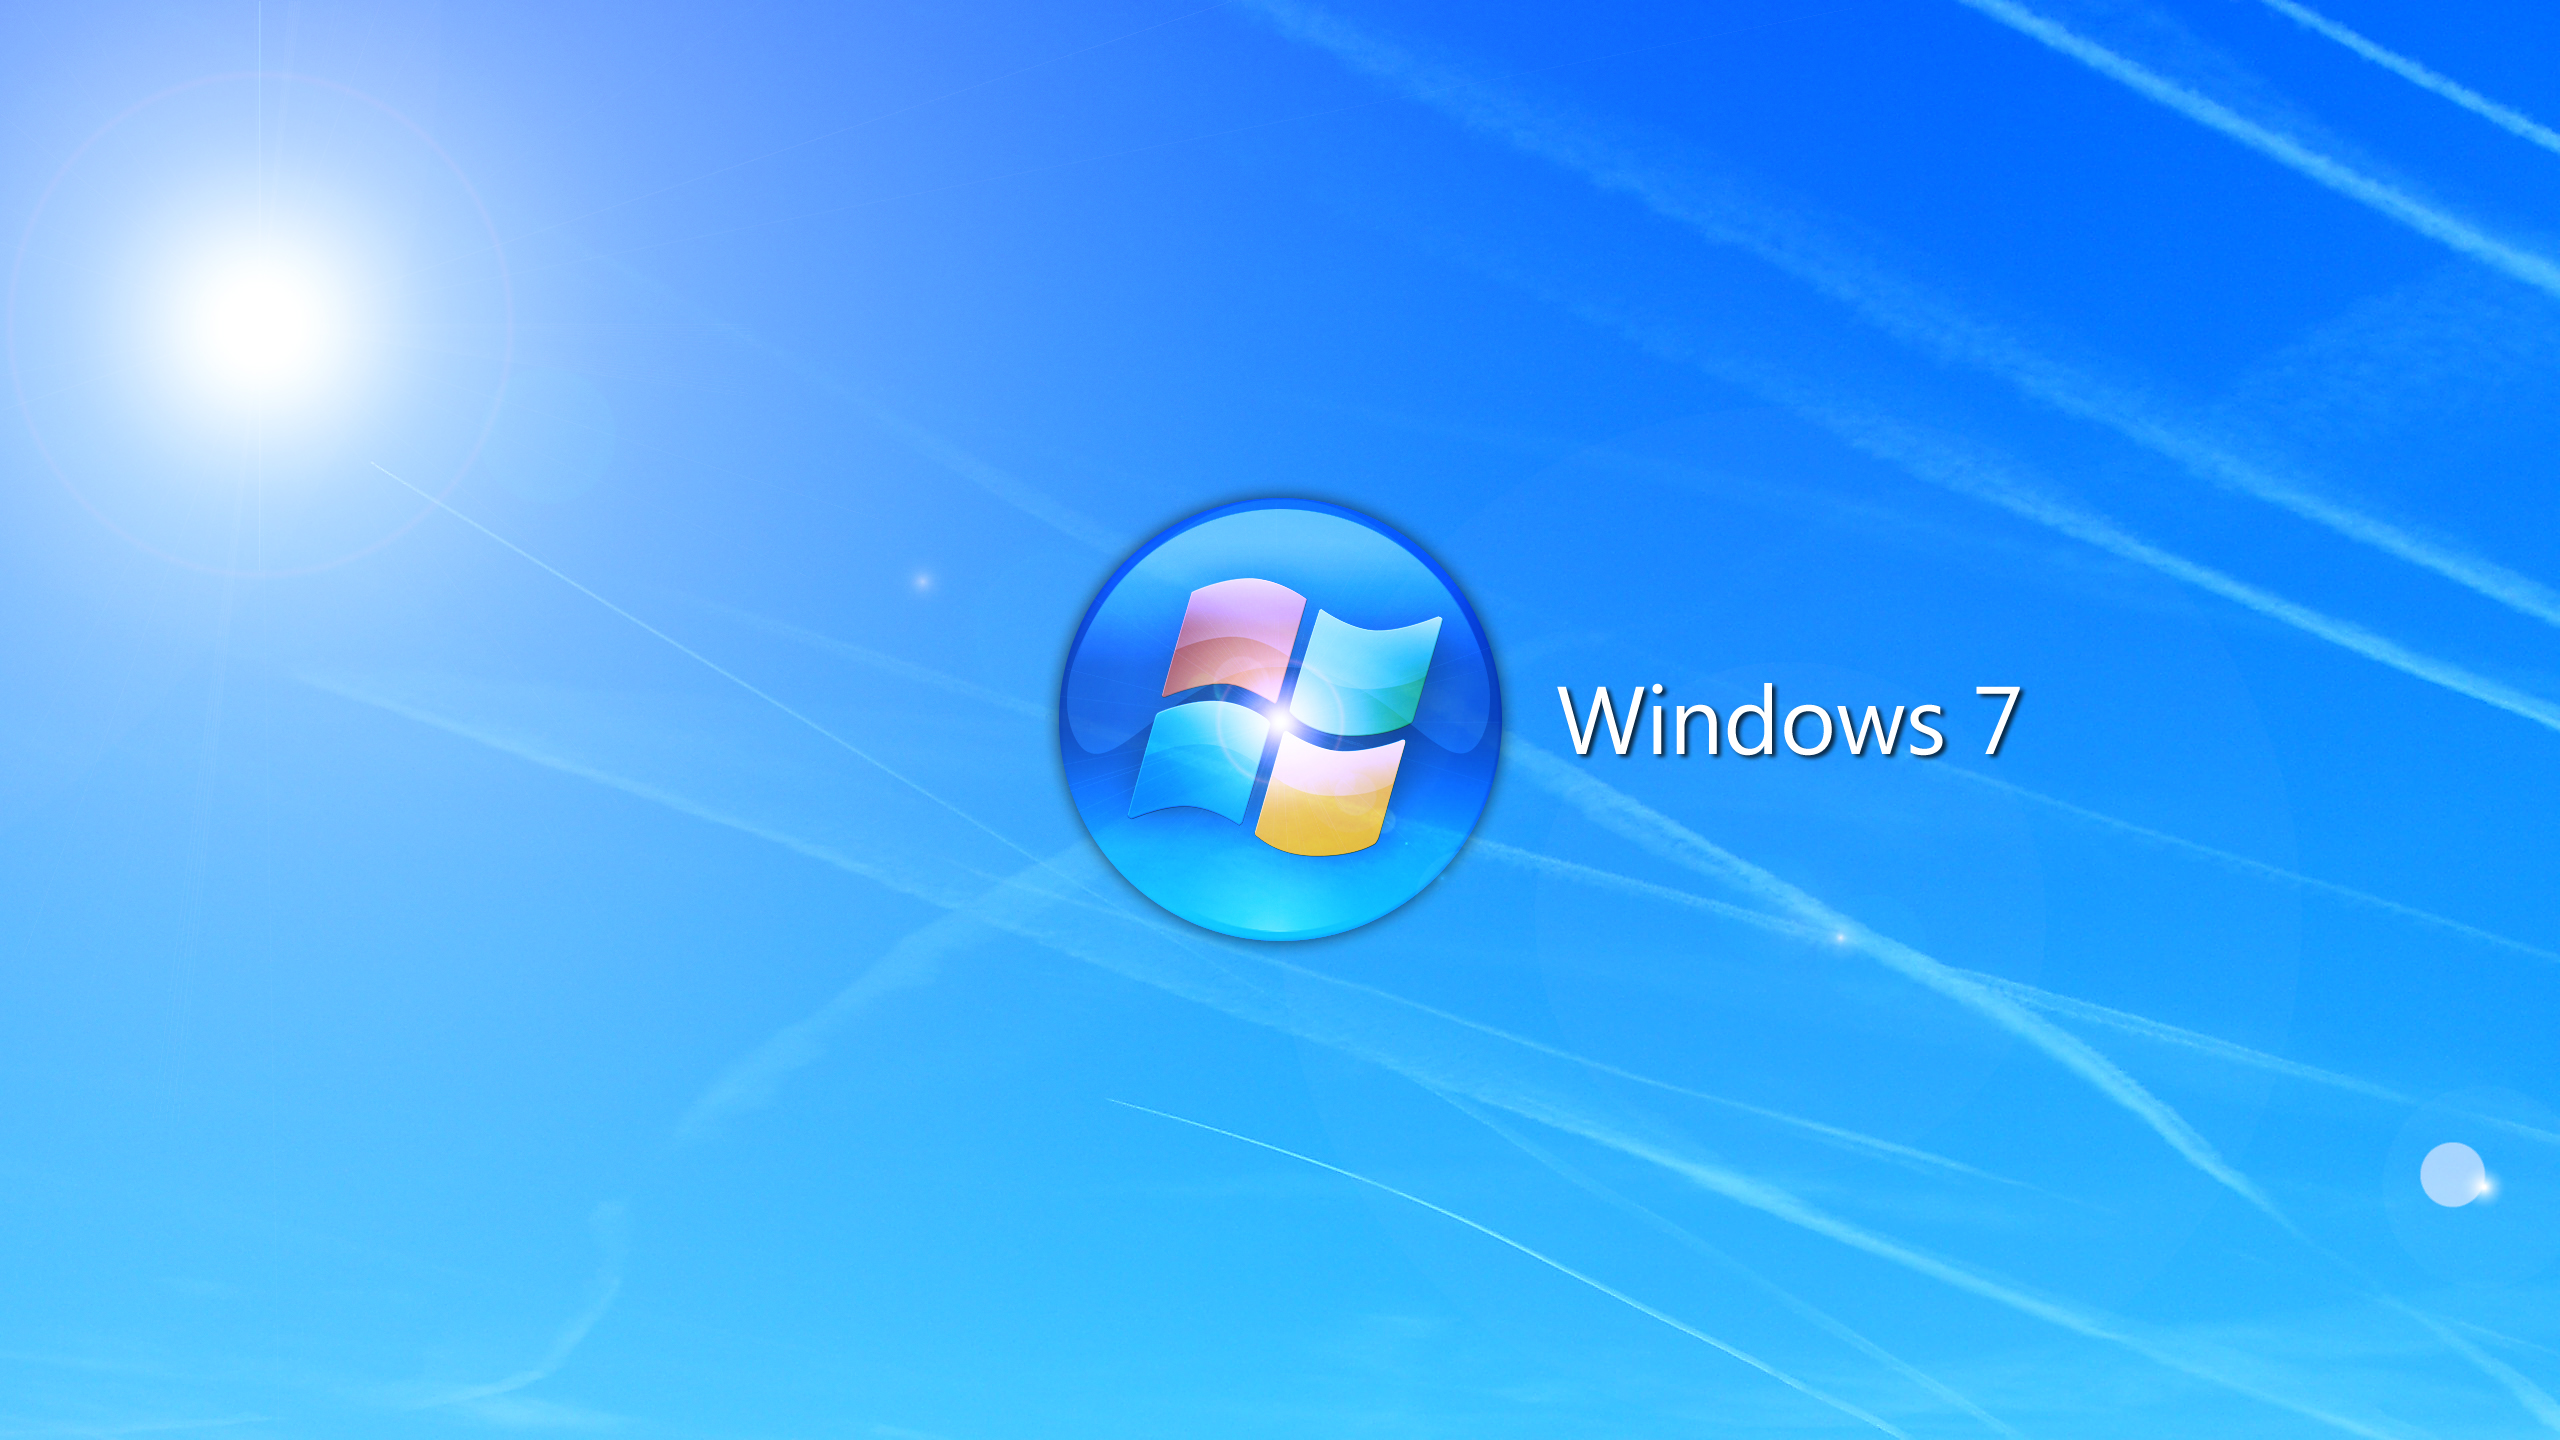 windows 7 glass energy blue theme free download